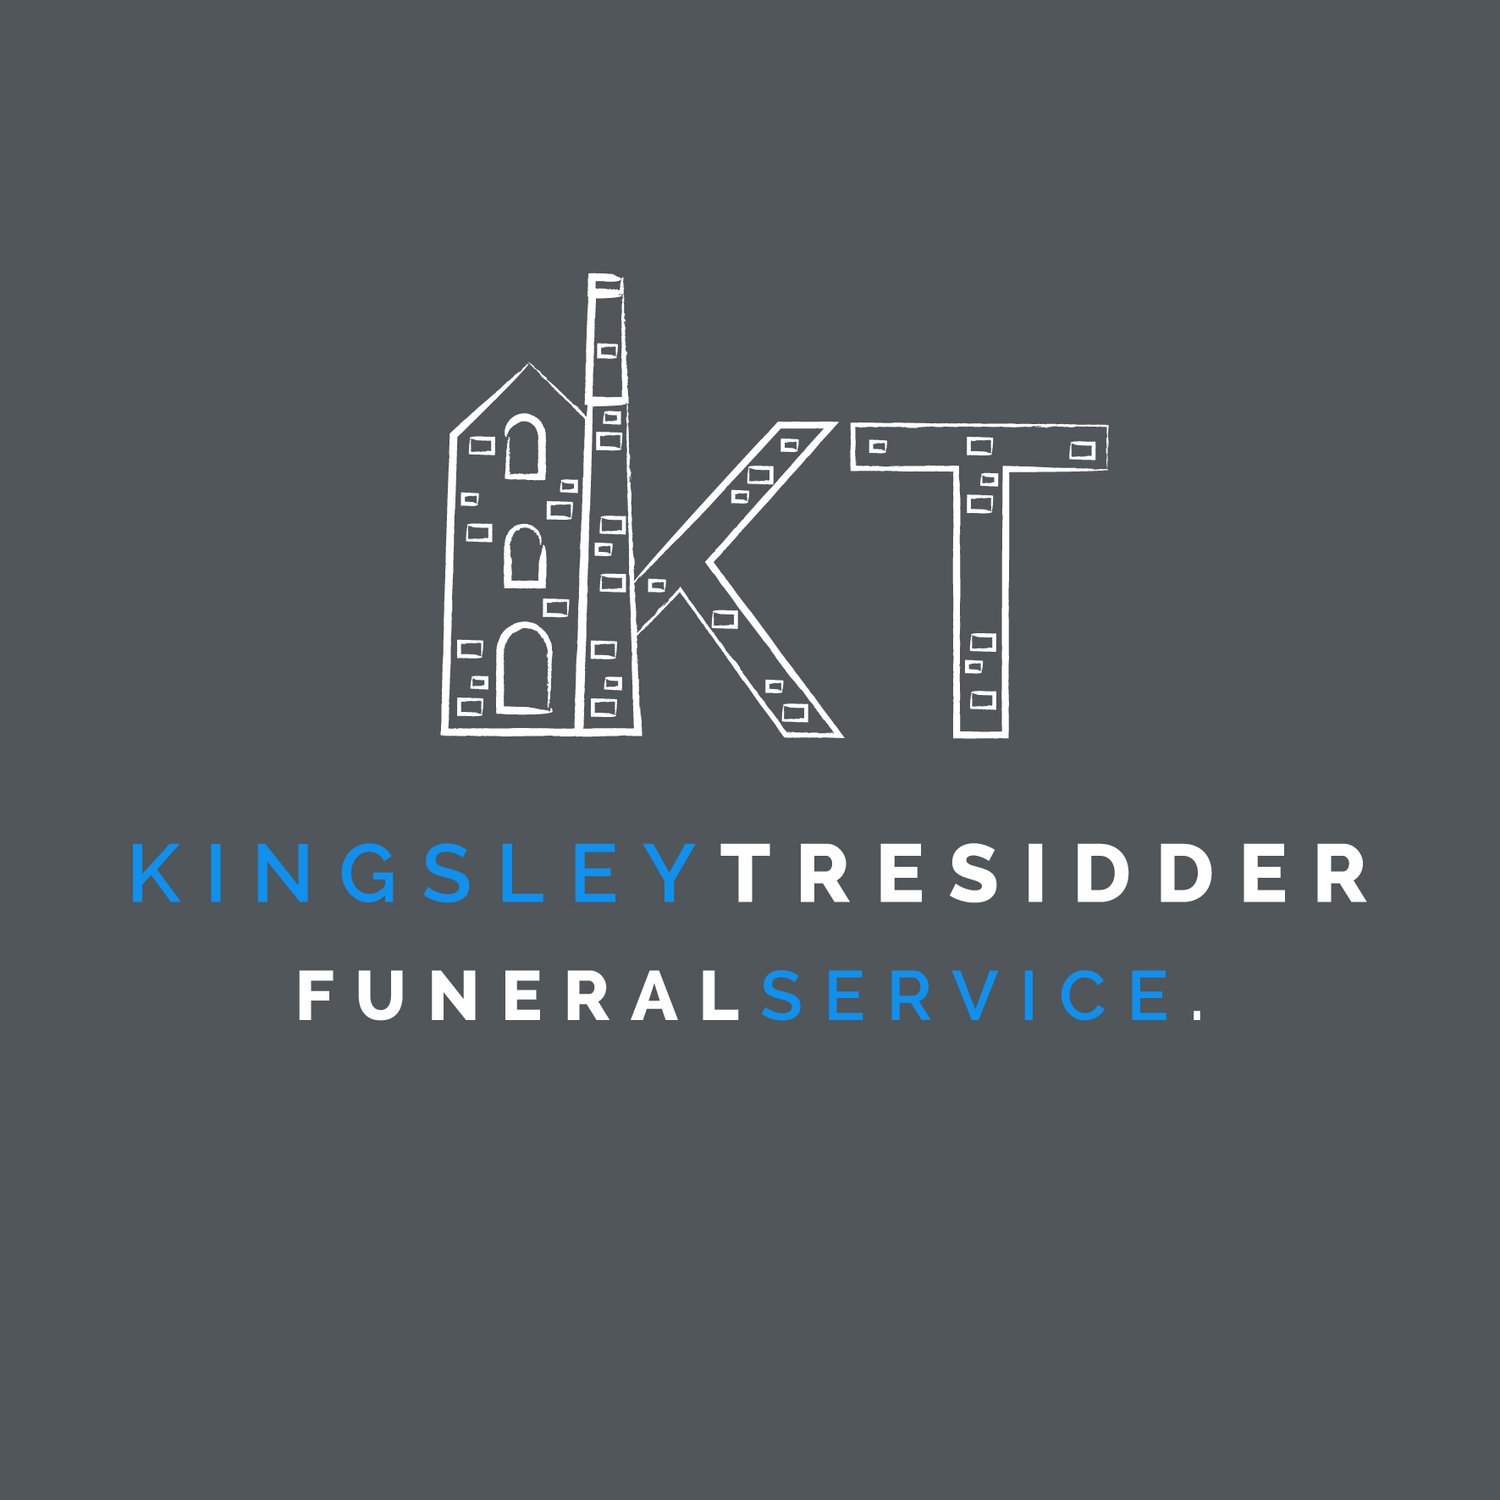 Kingsley Tresidder Funeral Service